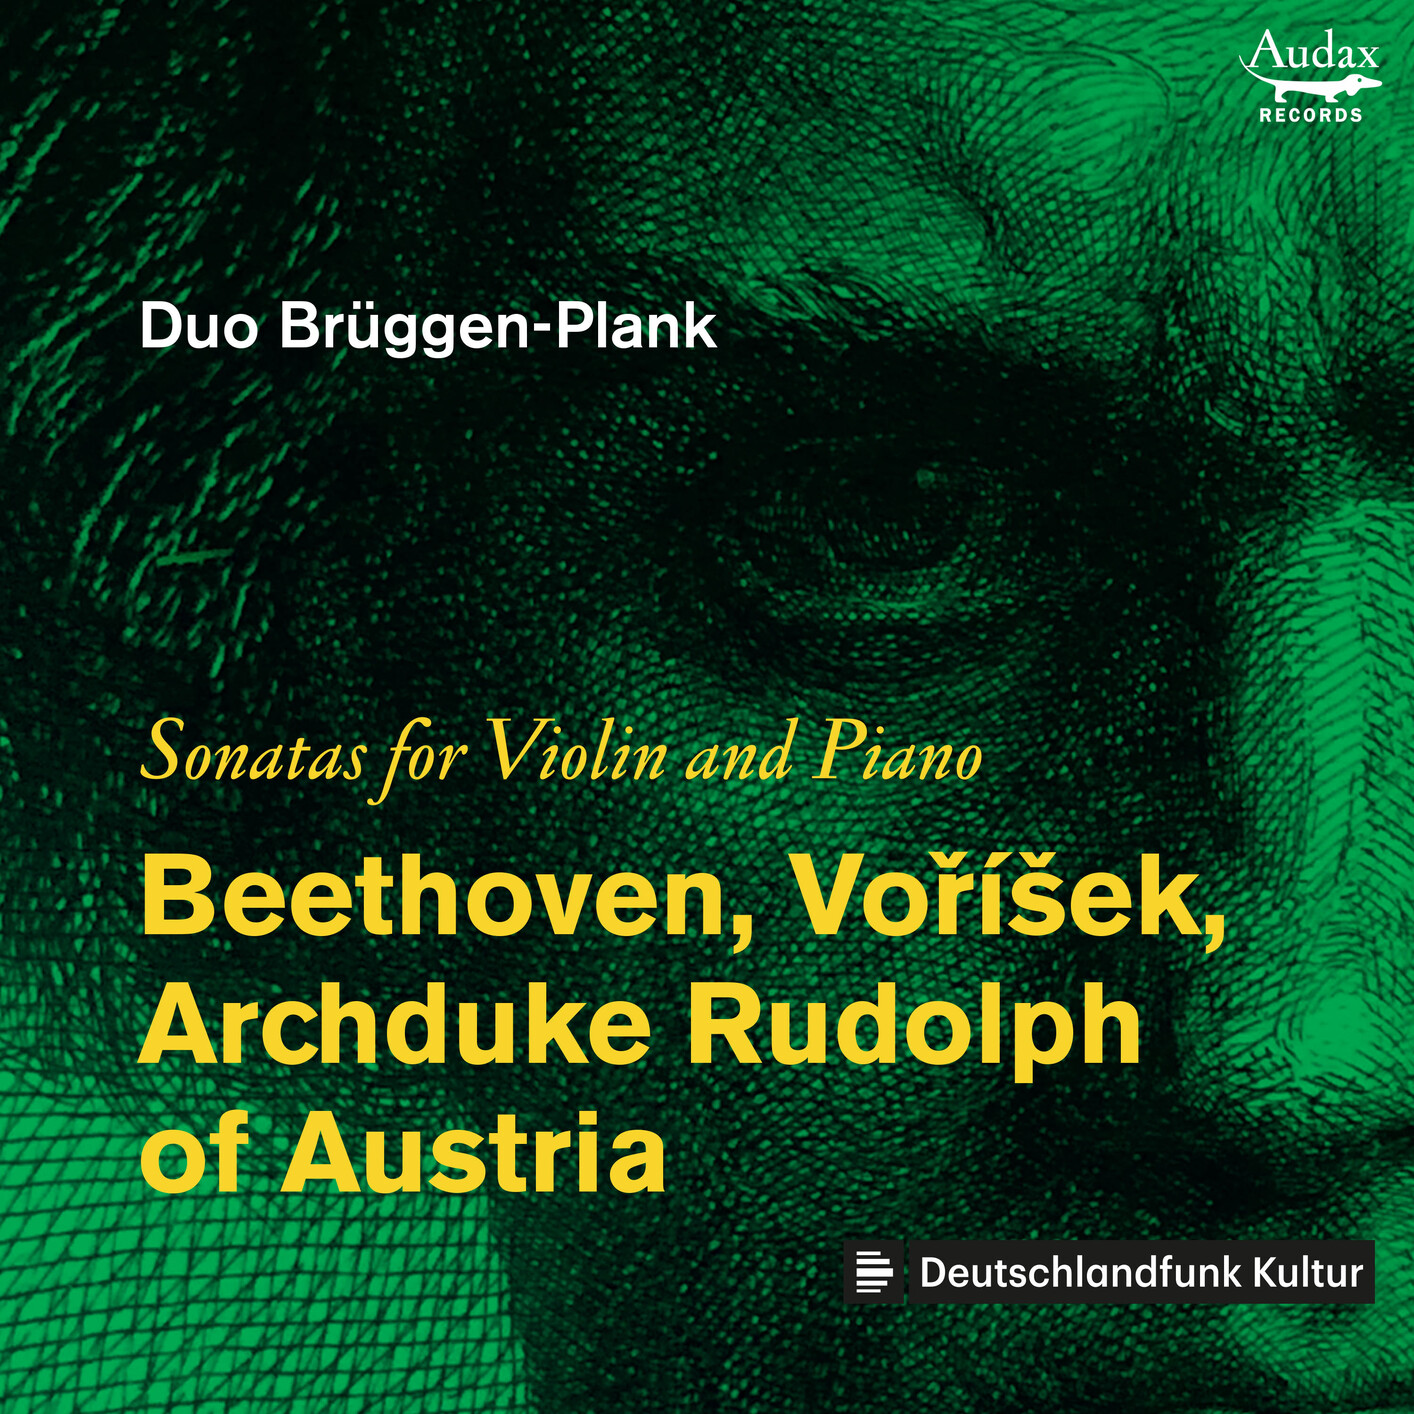 Duo Bruggen-Plank – Beethoven, Vorisek, Archduke & Rudolph of Austria – Sonatas for Violin and Piano (2021) [FLAC 24bit/48kHz]